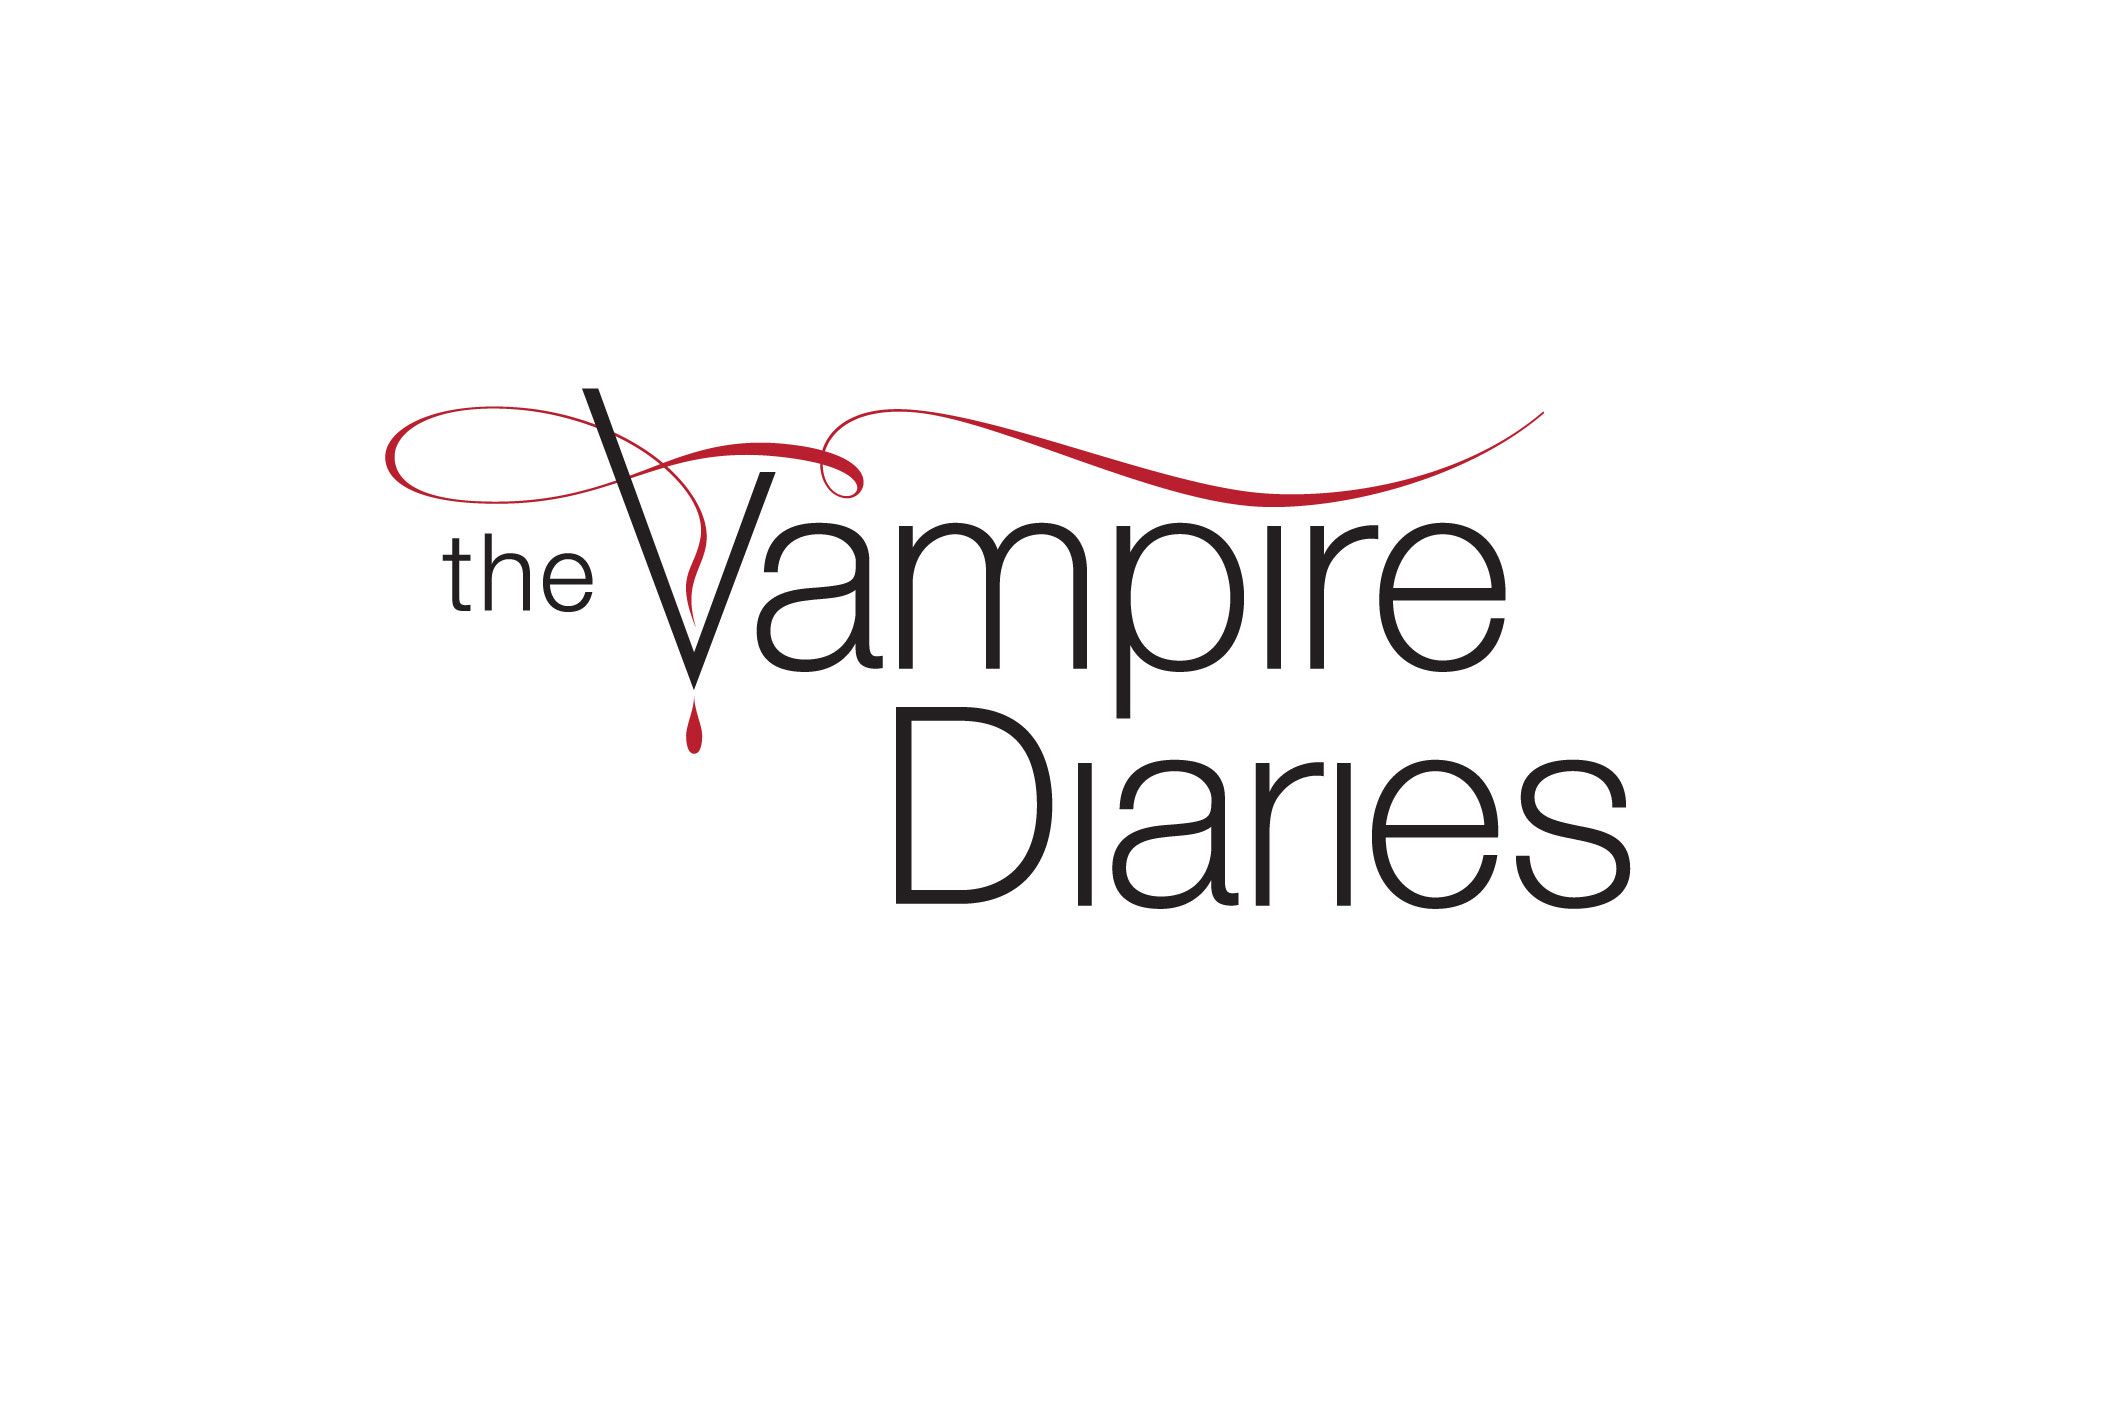 The vampire diaries Logos